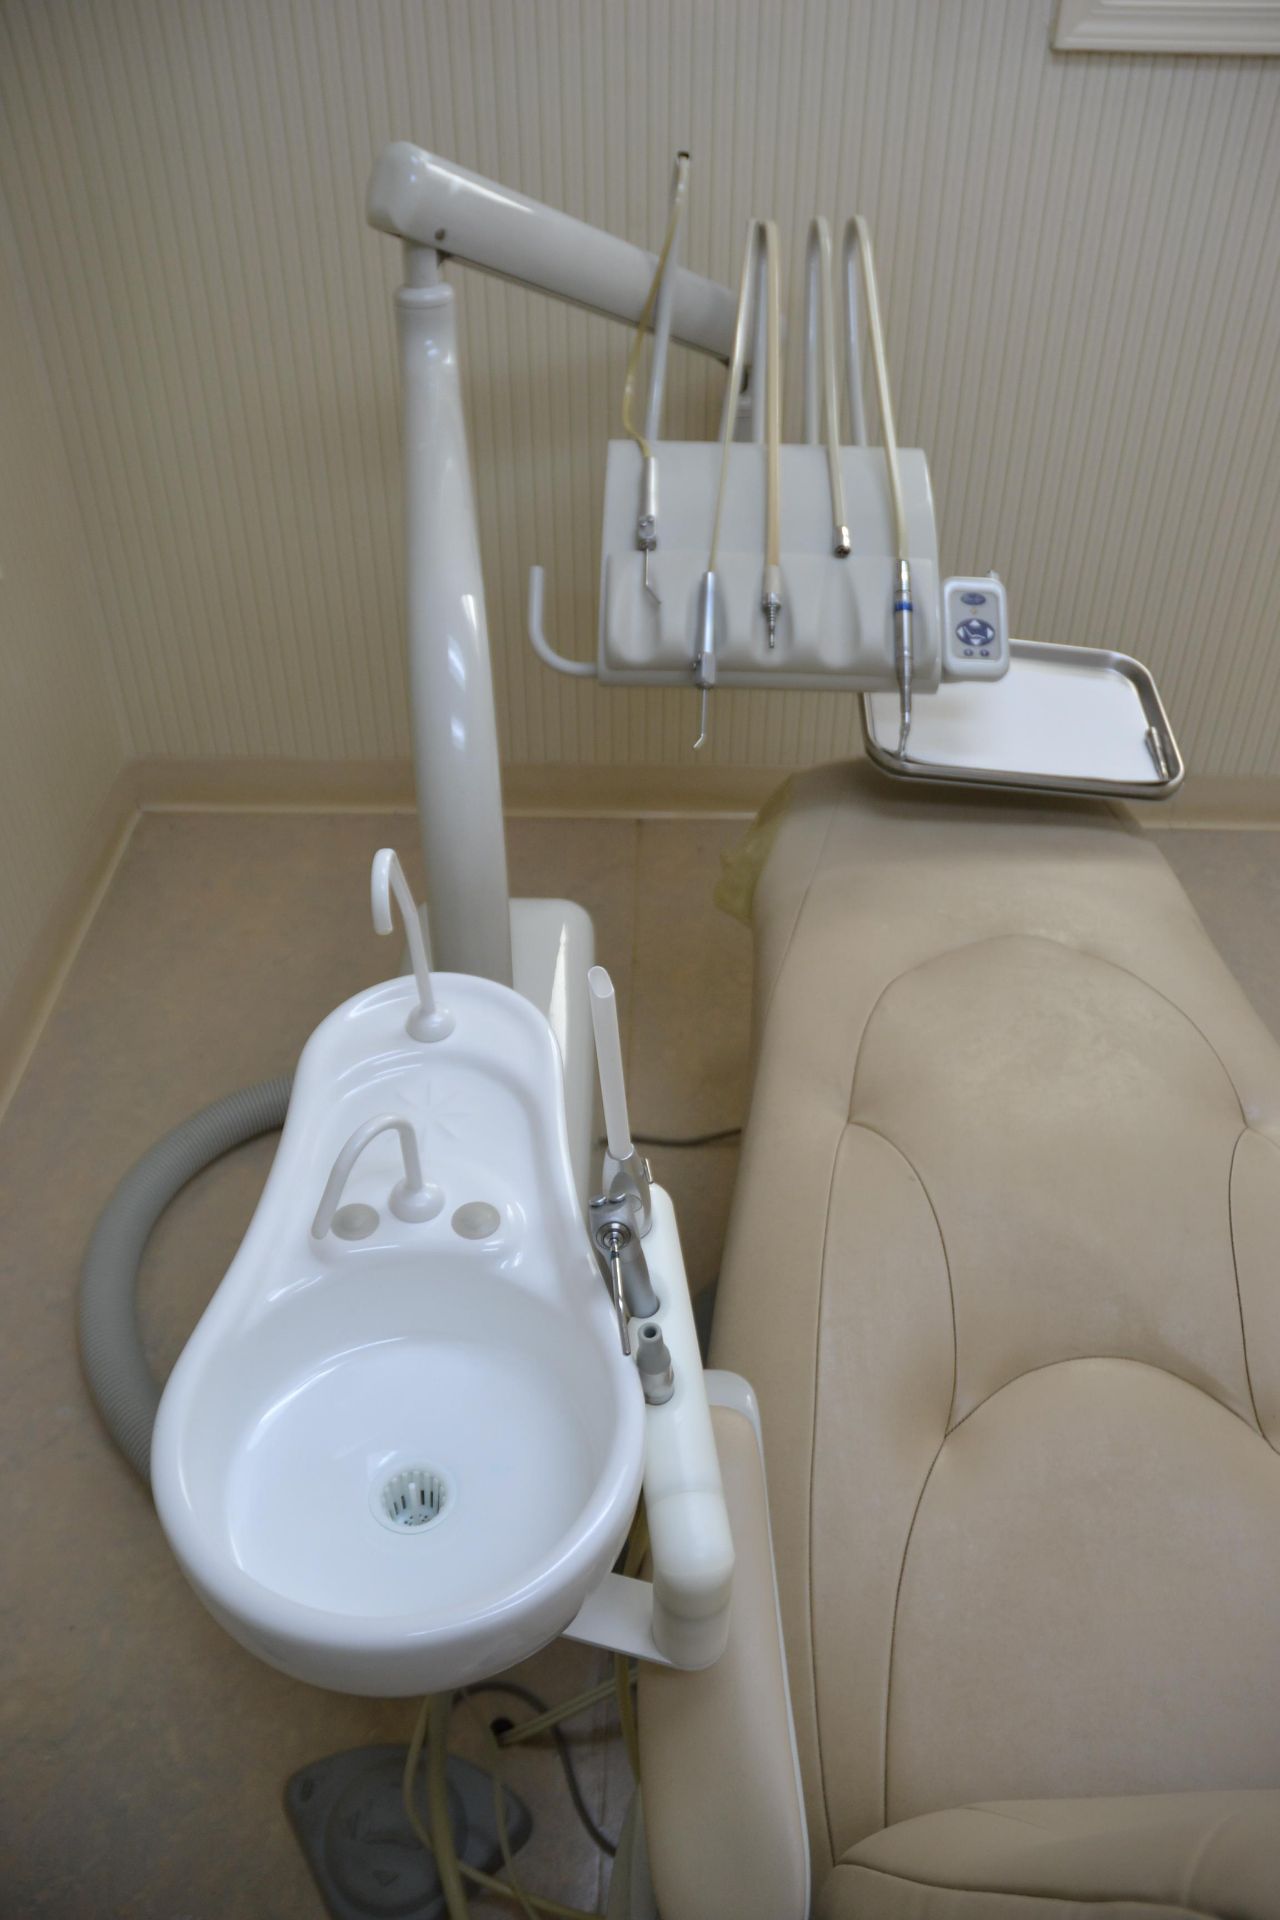 2004 Pelton & Crane SP30 Dental Exam Chair - Image 2 of 4